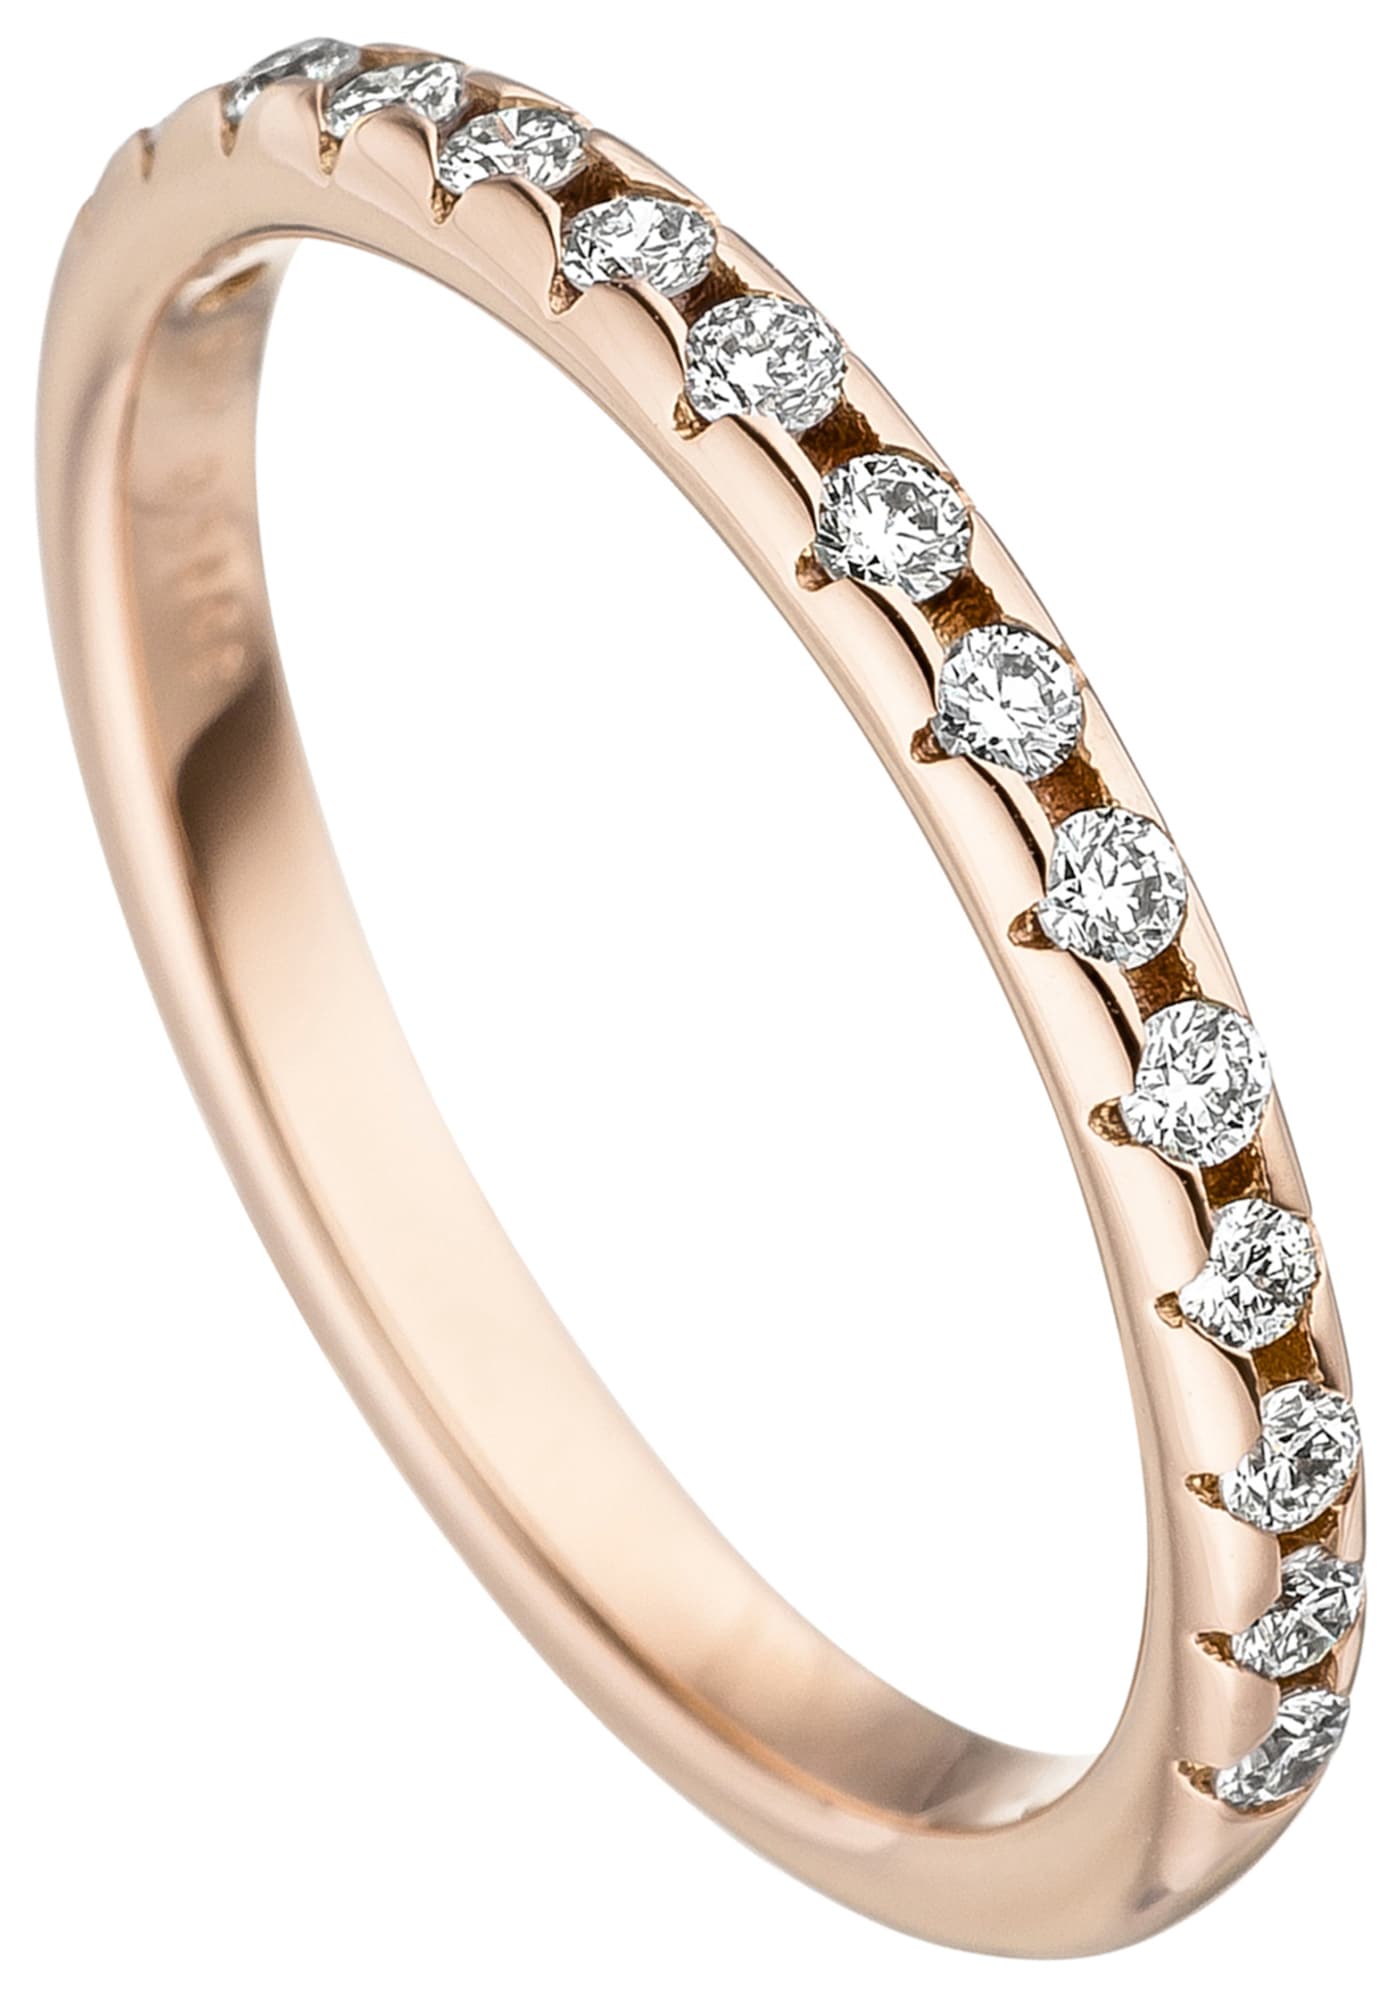 JOBO Fingerring »Ring mit 15 Diamanten«, 585 Roségold kaufen | I'm walking